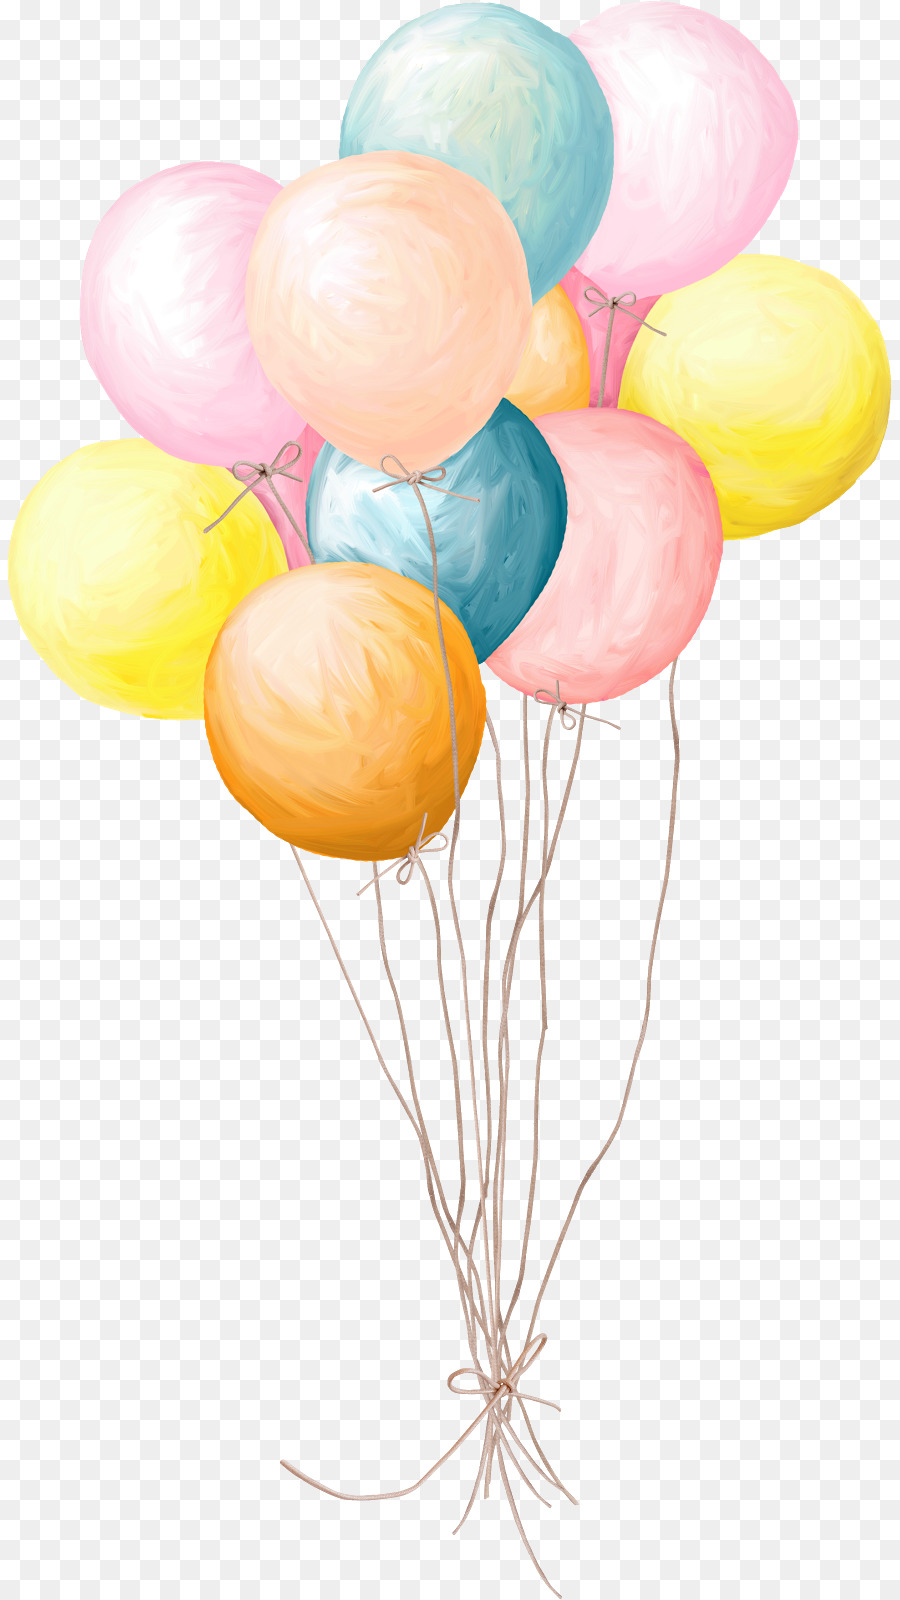 Portable Network Graphics clipart-Bild Geburtstag Ballon - Geburtstag